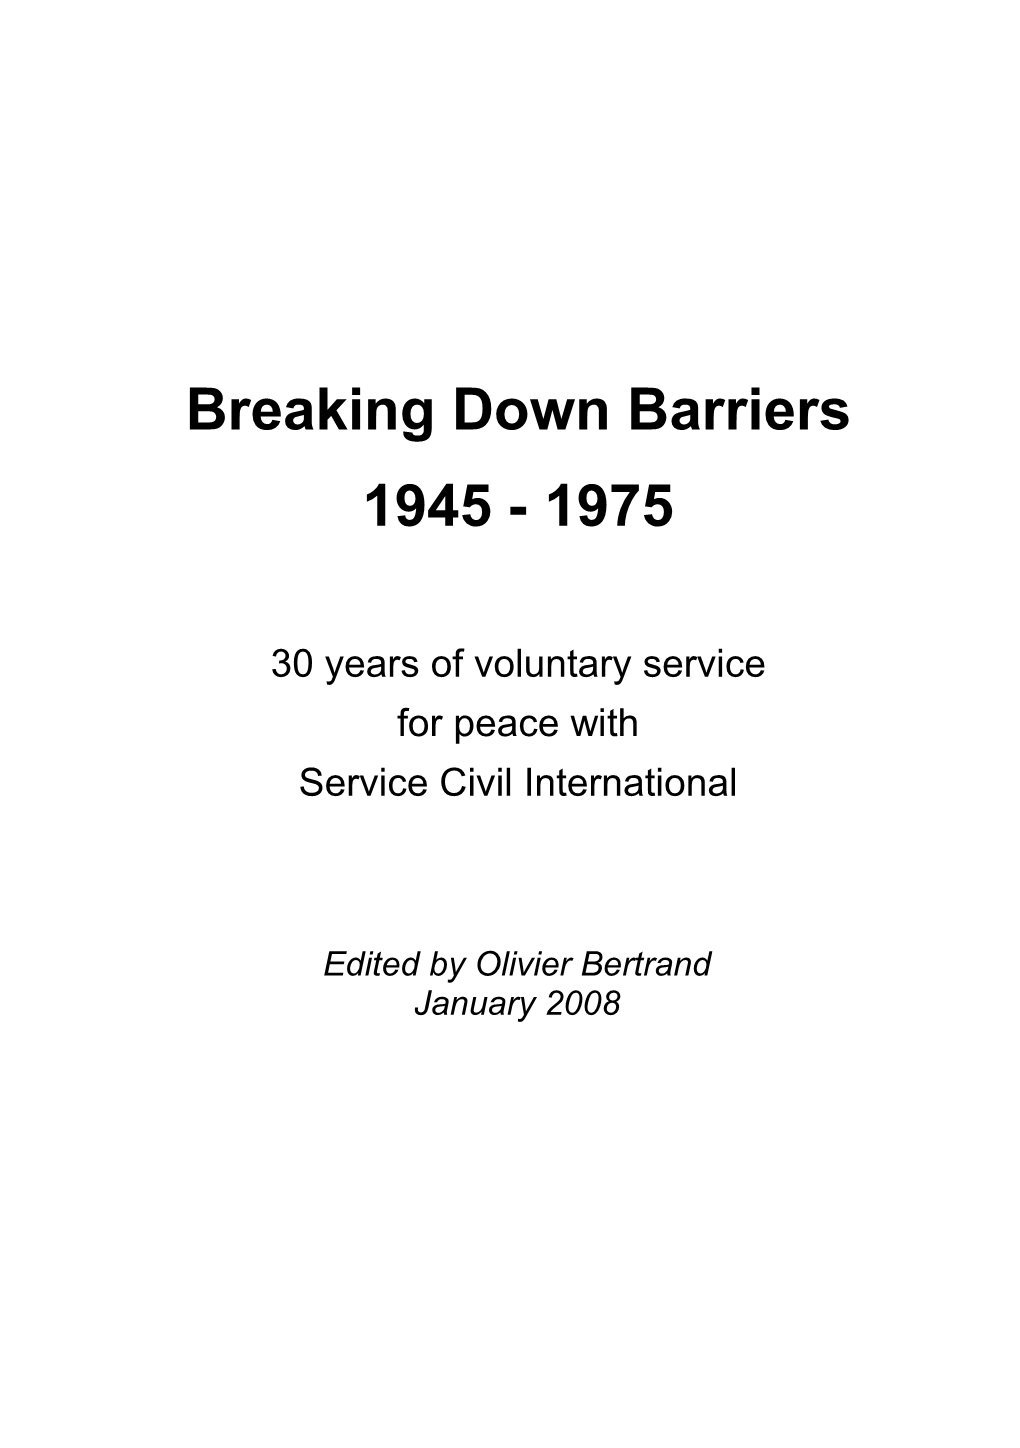 Breaking Down Barriers 1945 - 1975